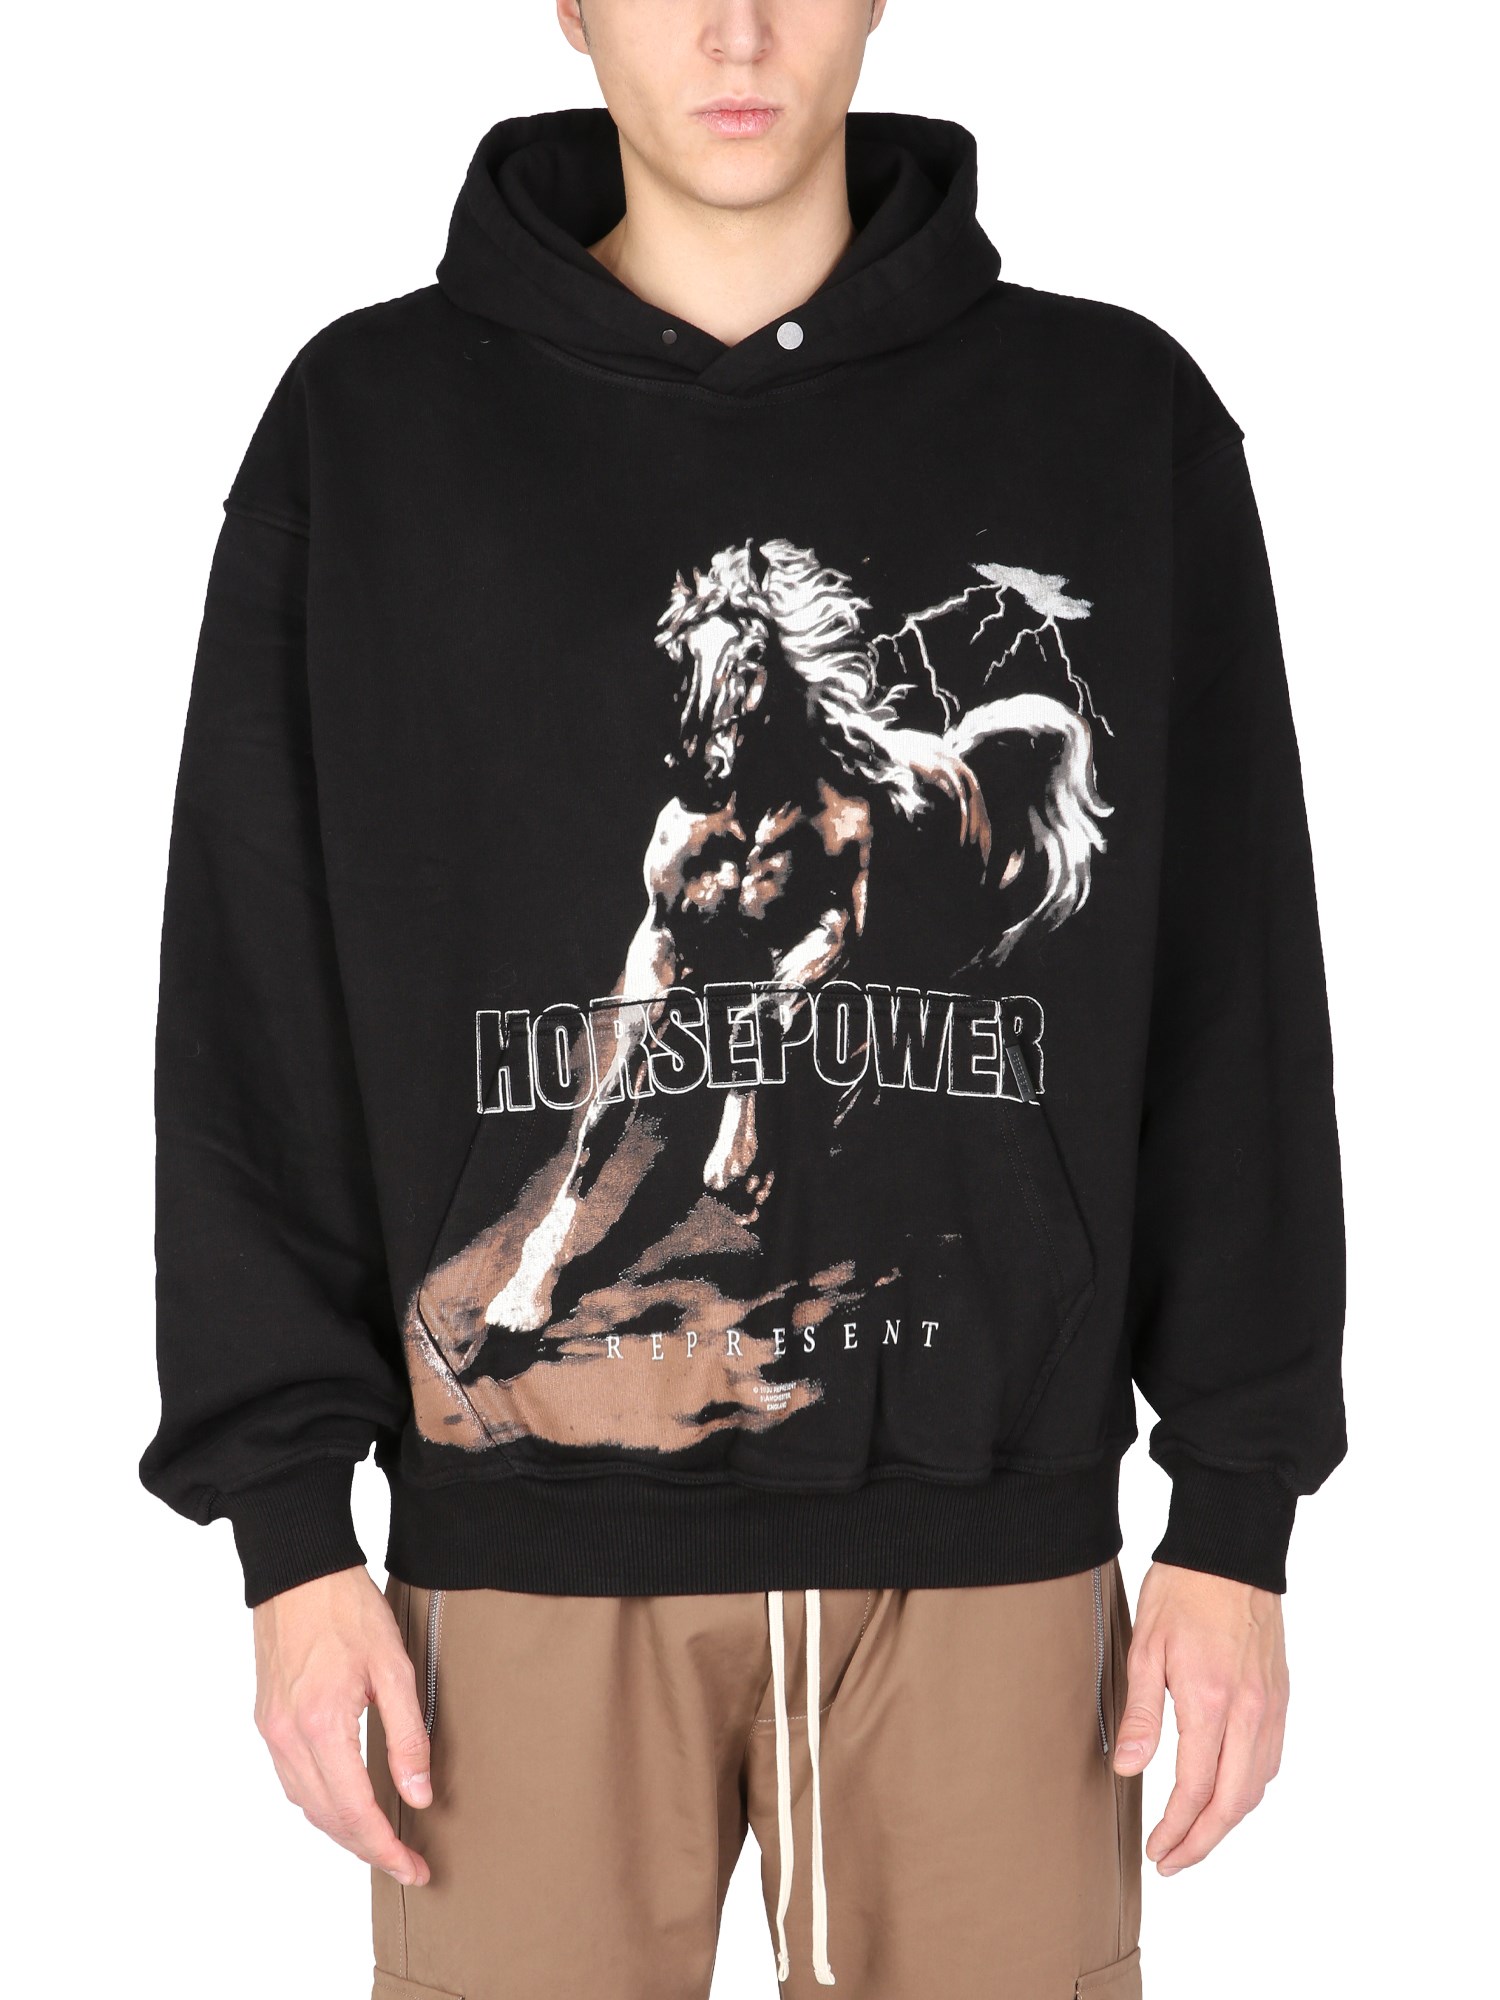 represent "horsepower" sweatshirt